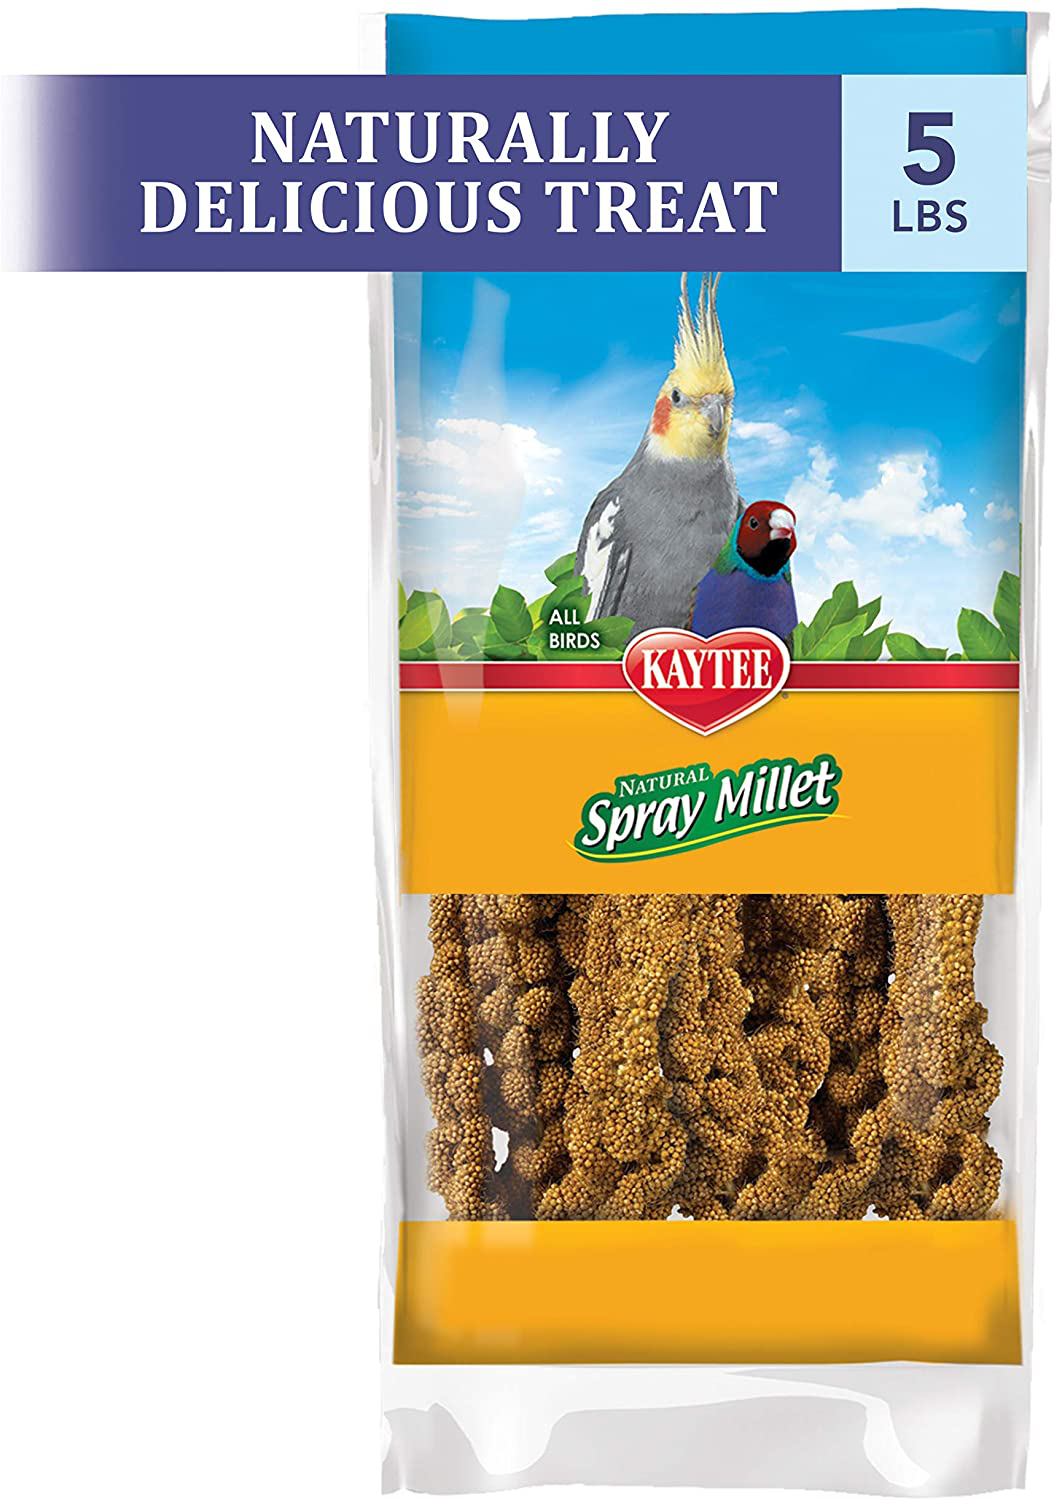 Kaytee Spray Millet for Pet Birds